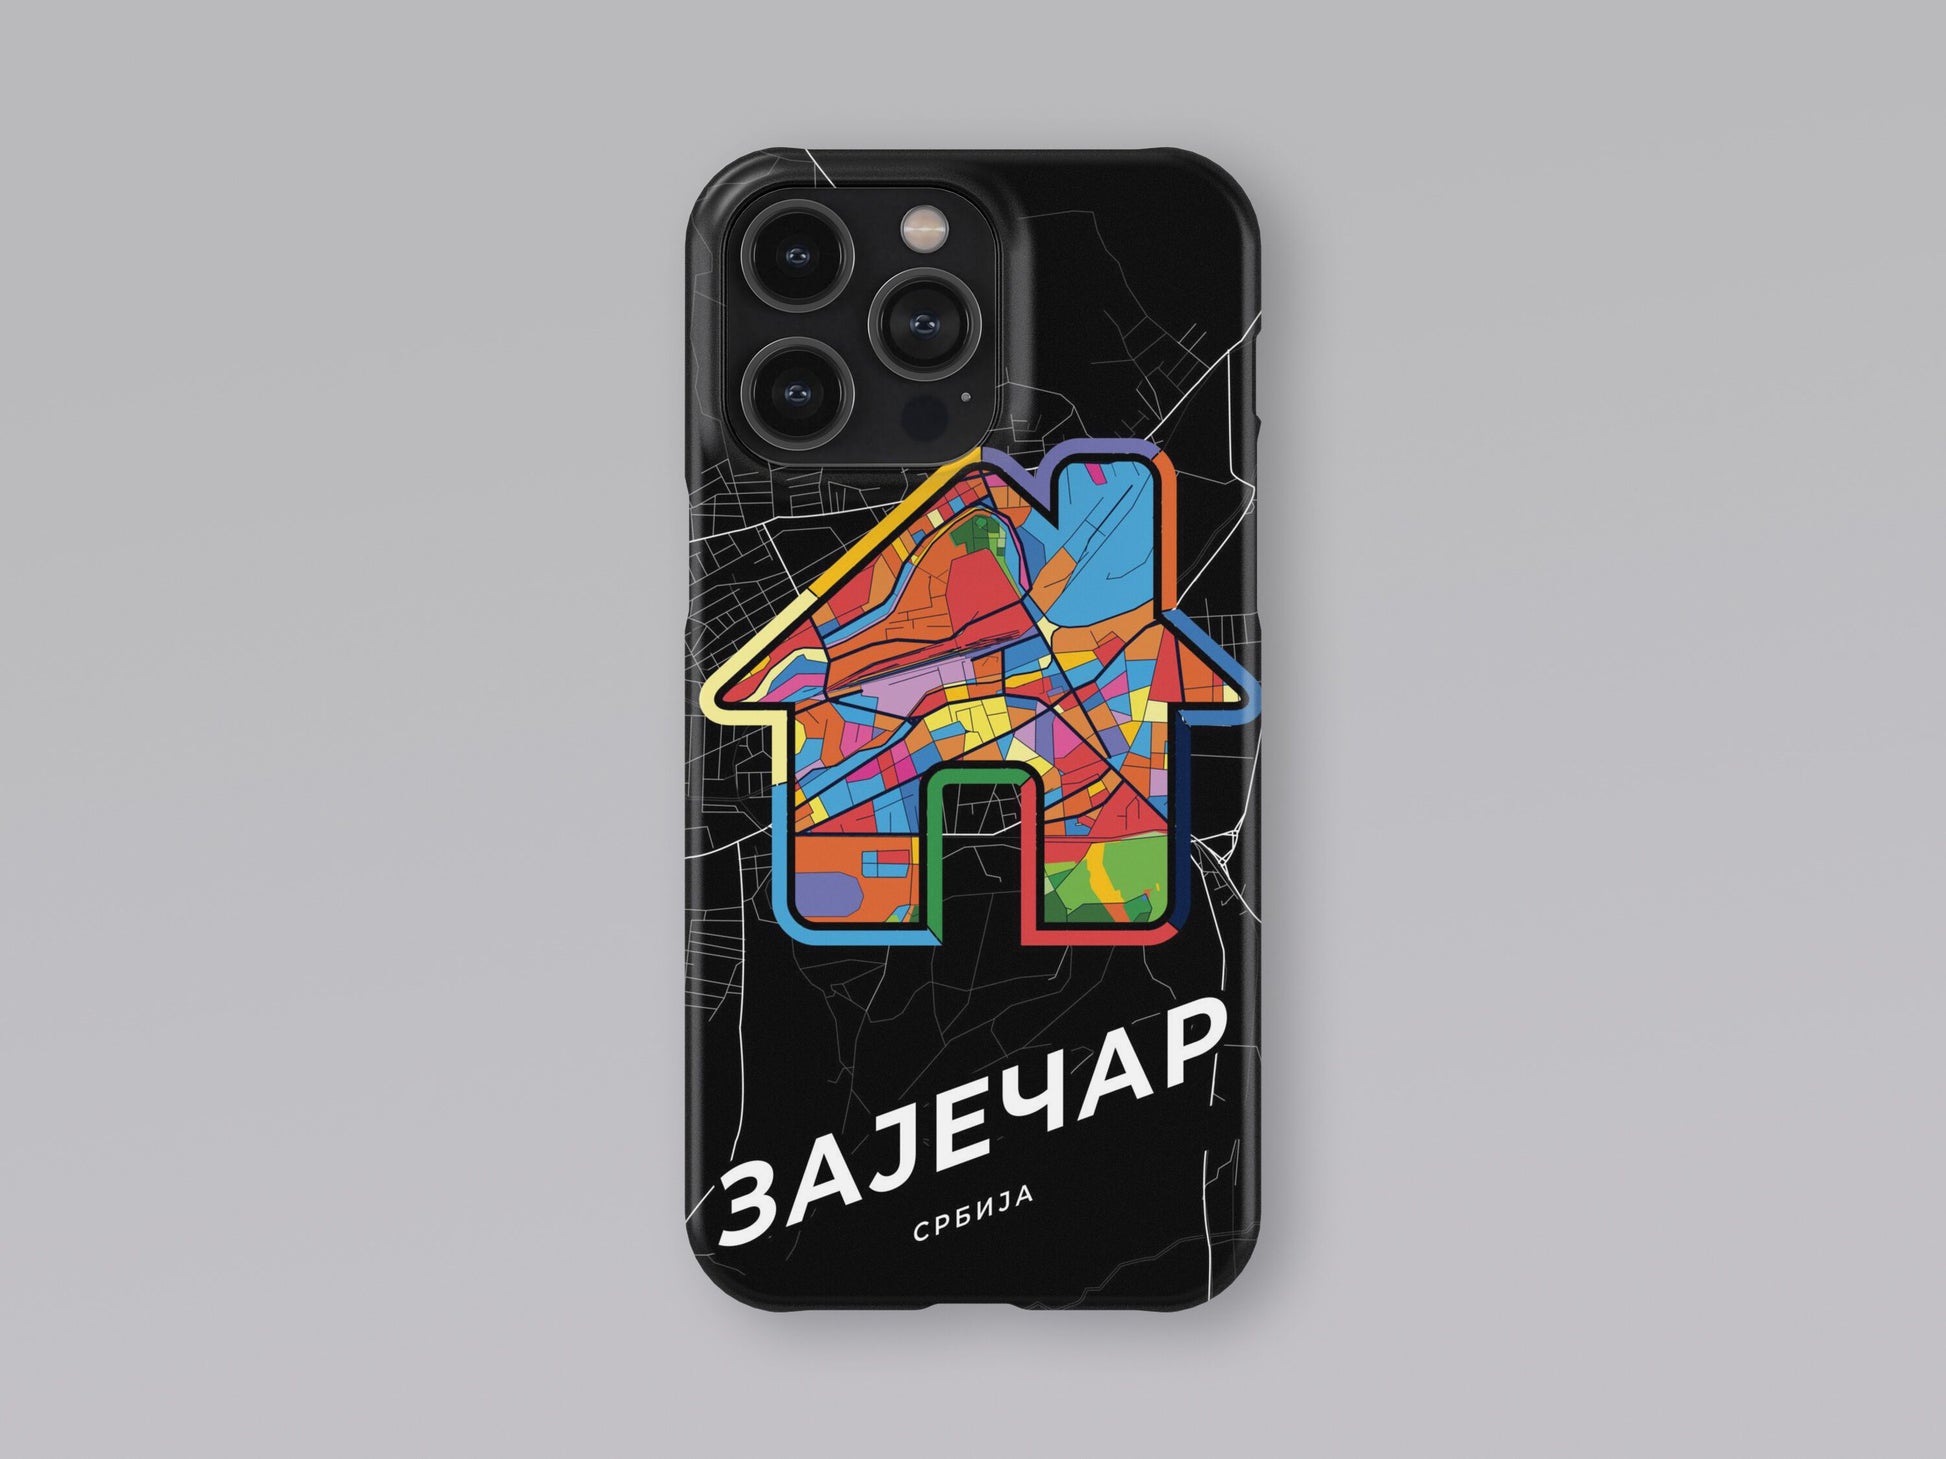 Zaječar Serbia slim phone case with colorful icon 3